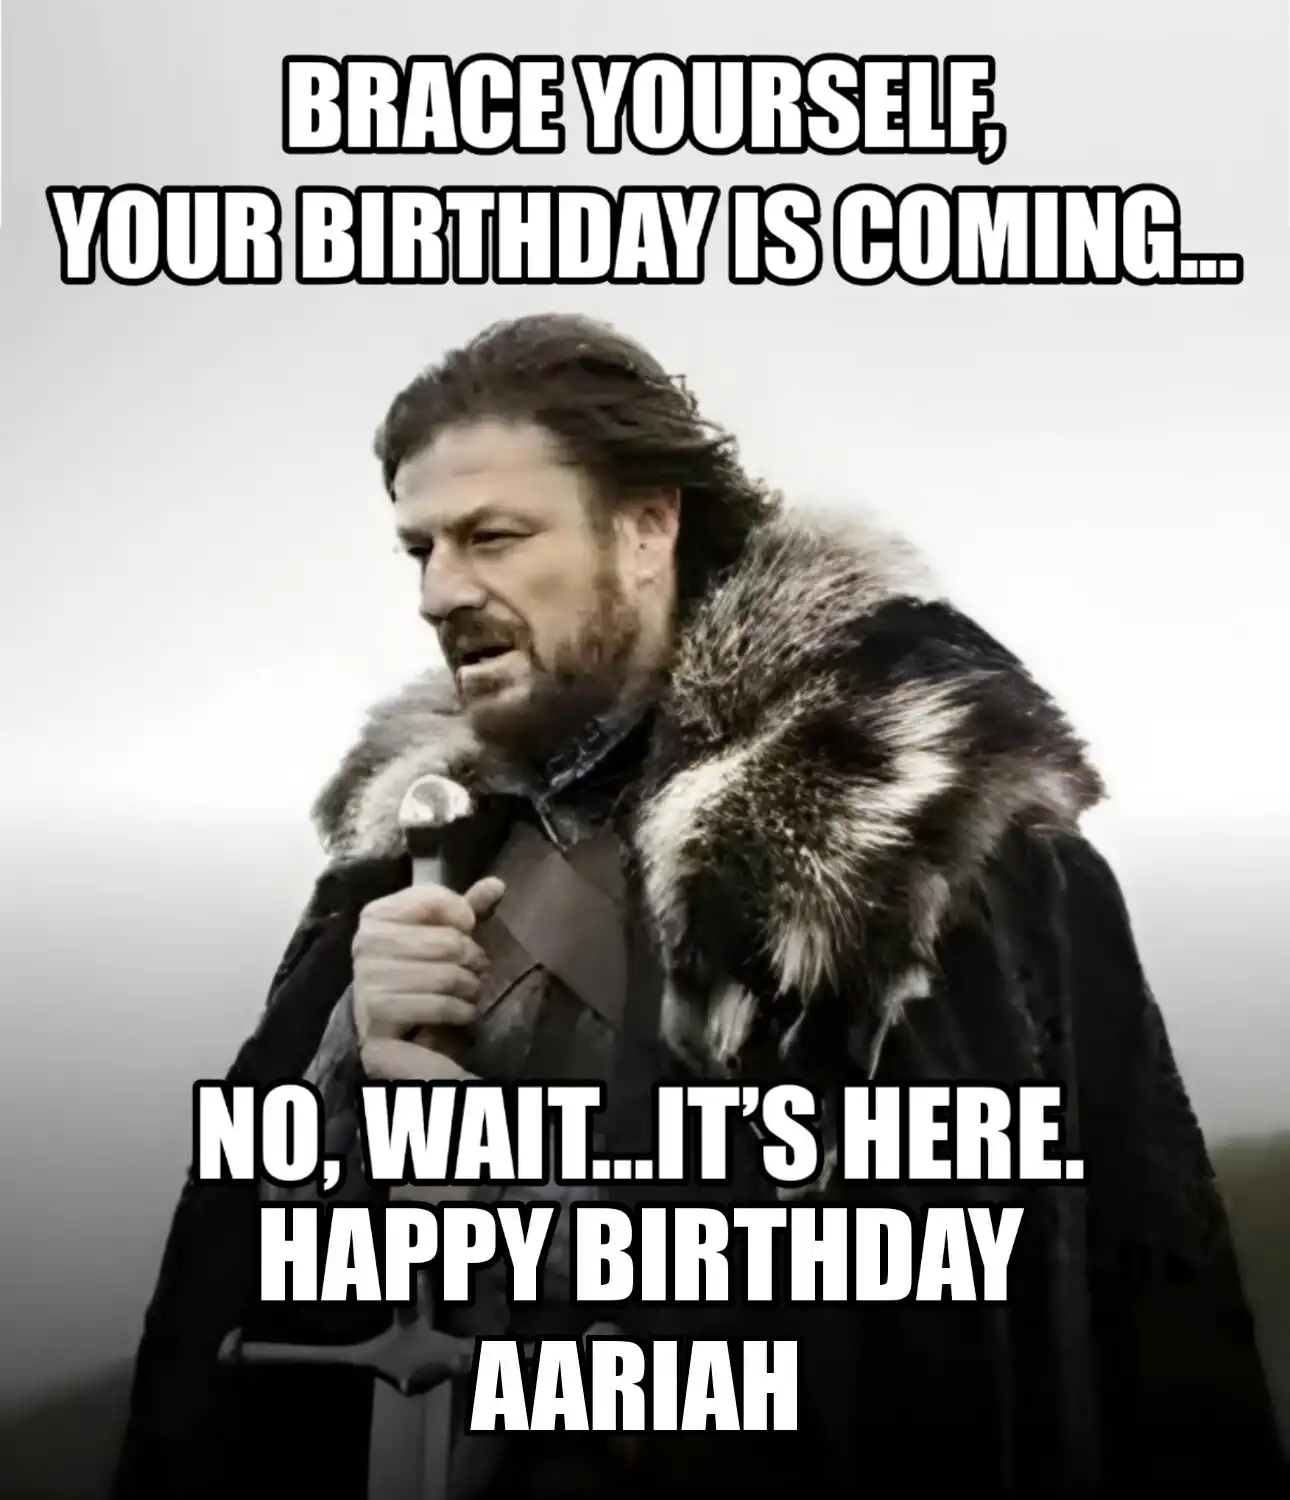 Happy Birthday Aariah Brace Yourself Your Birthday Is Coming Meme